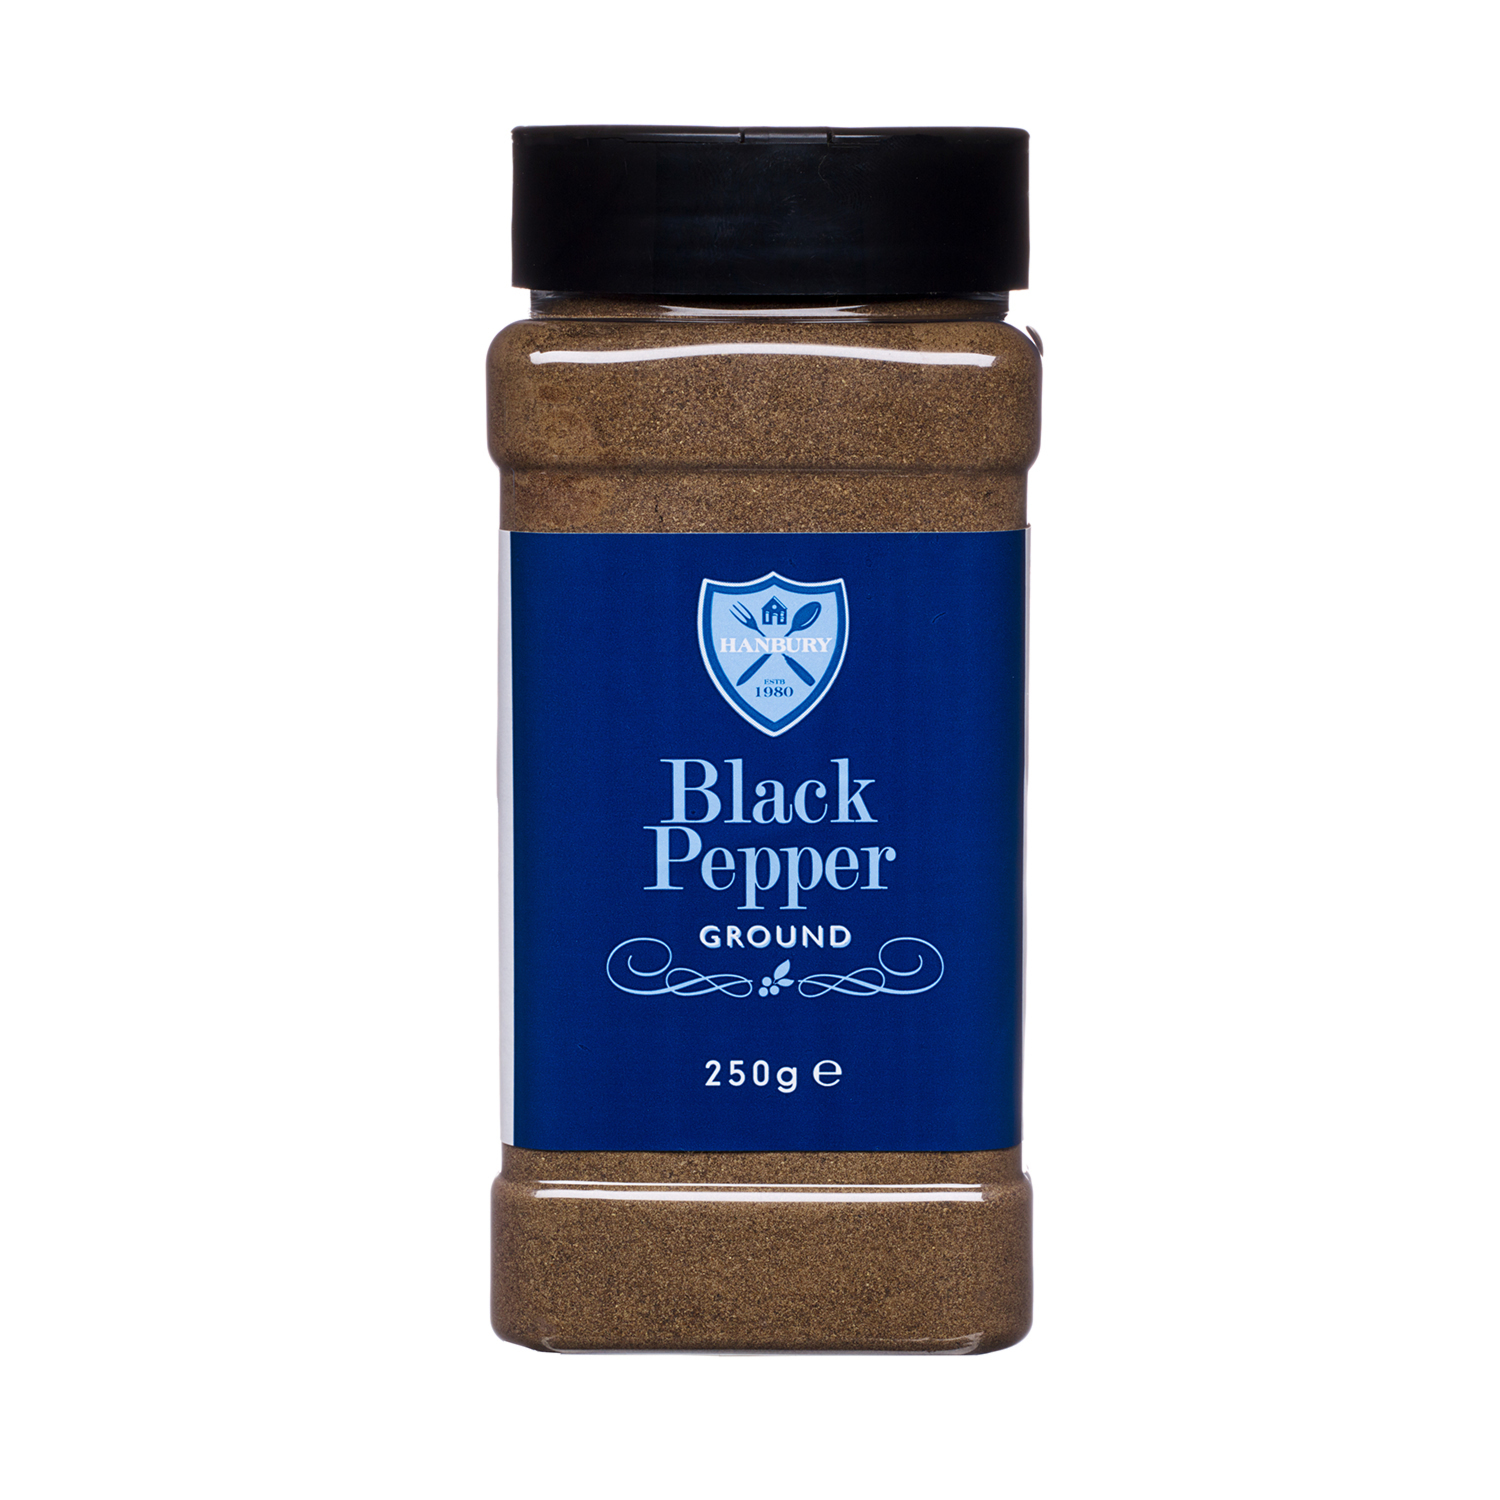 Ground Black Pepper Image